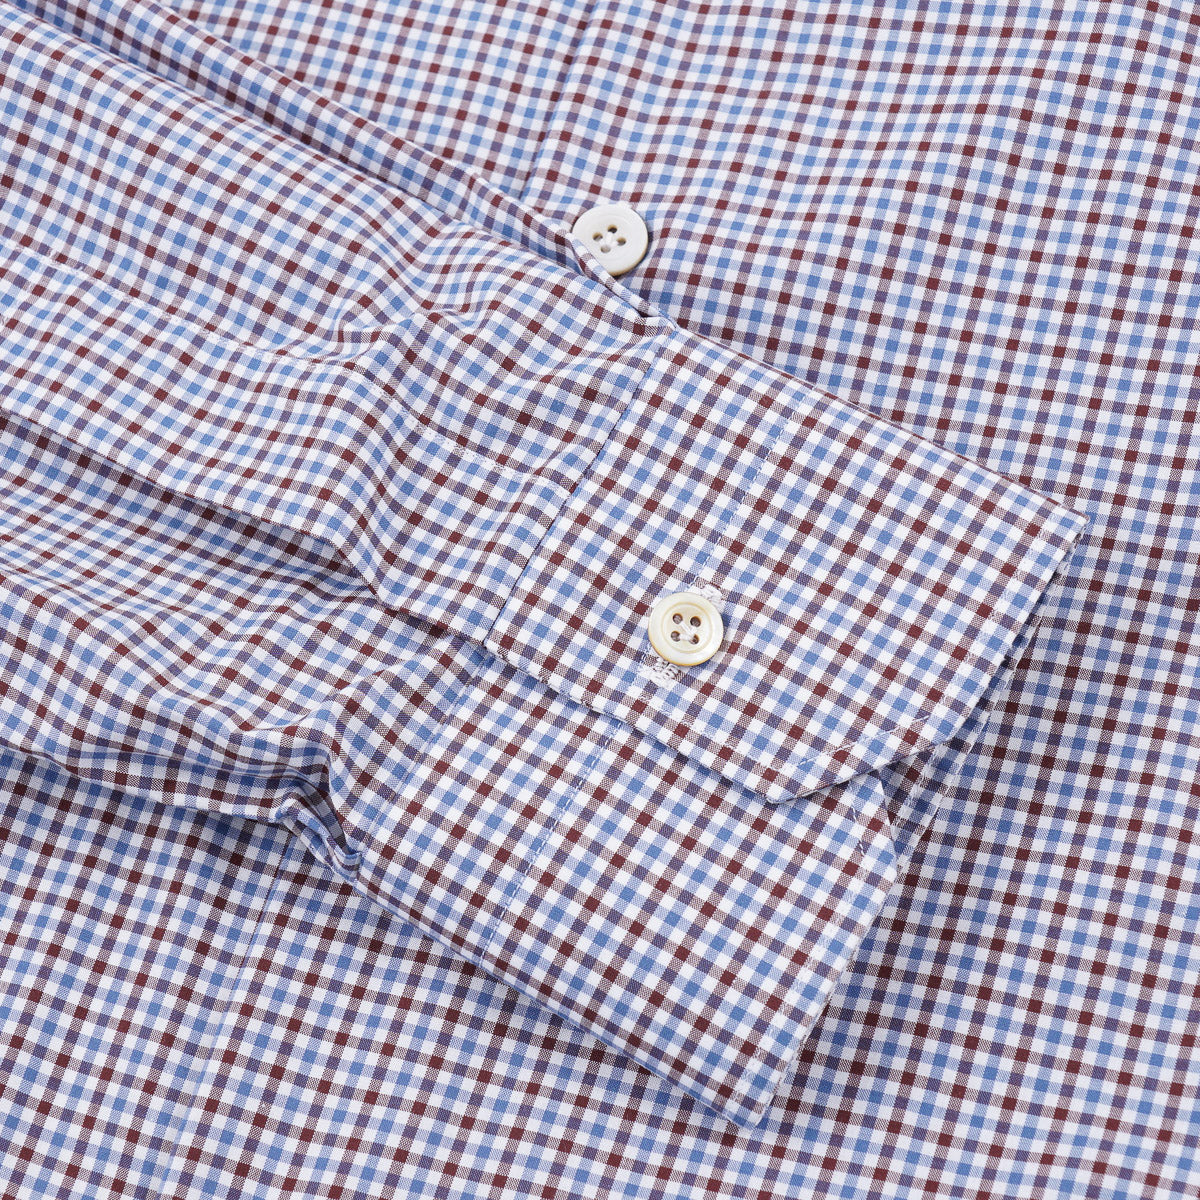 Kiton Slim-Fit Cotton Dress Shirt - Top Shelf Apparel